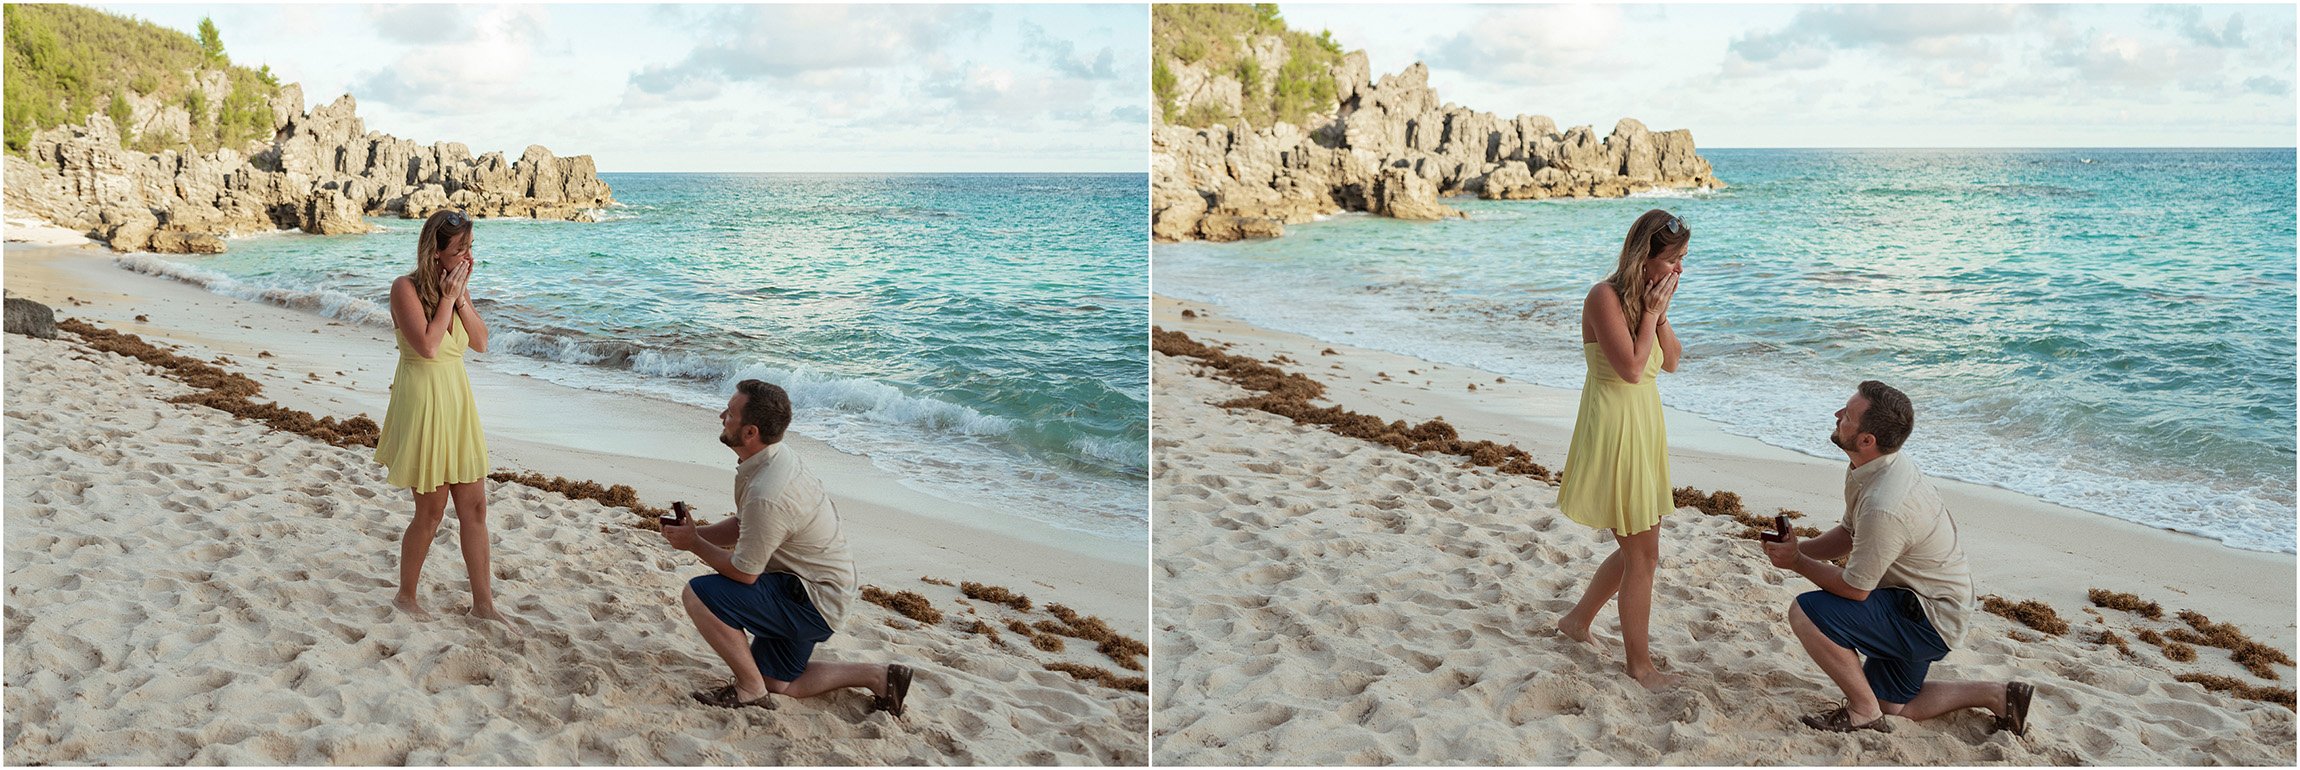 Bermuda Proposal Photographer_Church Bay Beach_©FianderFoto_003.jpg